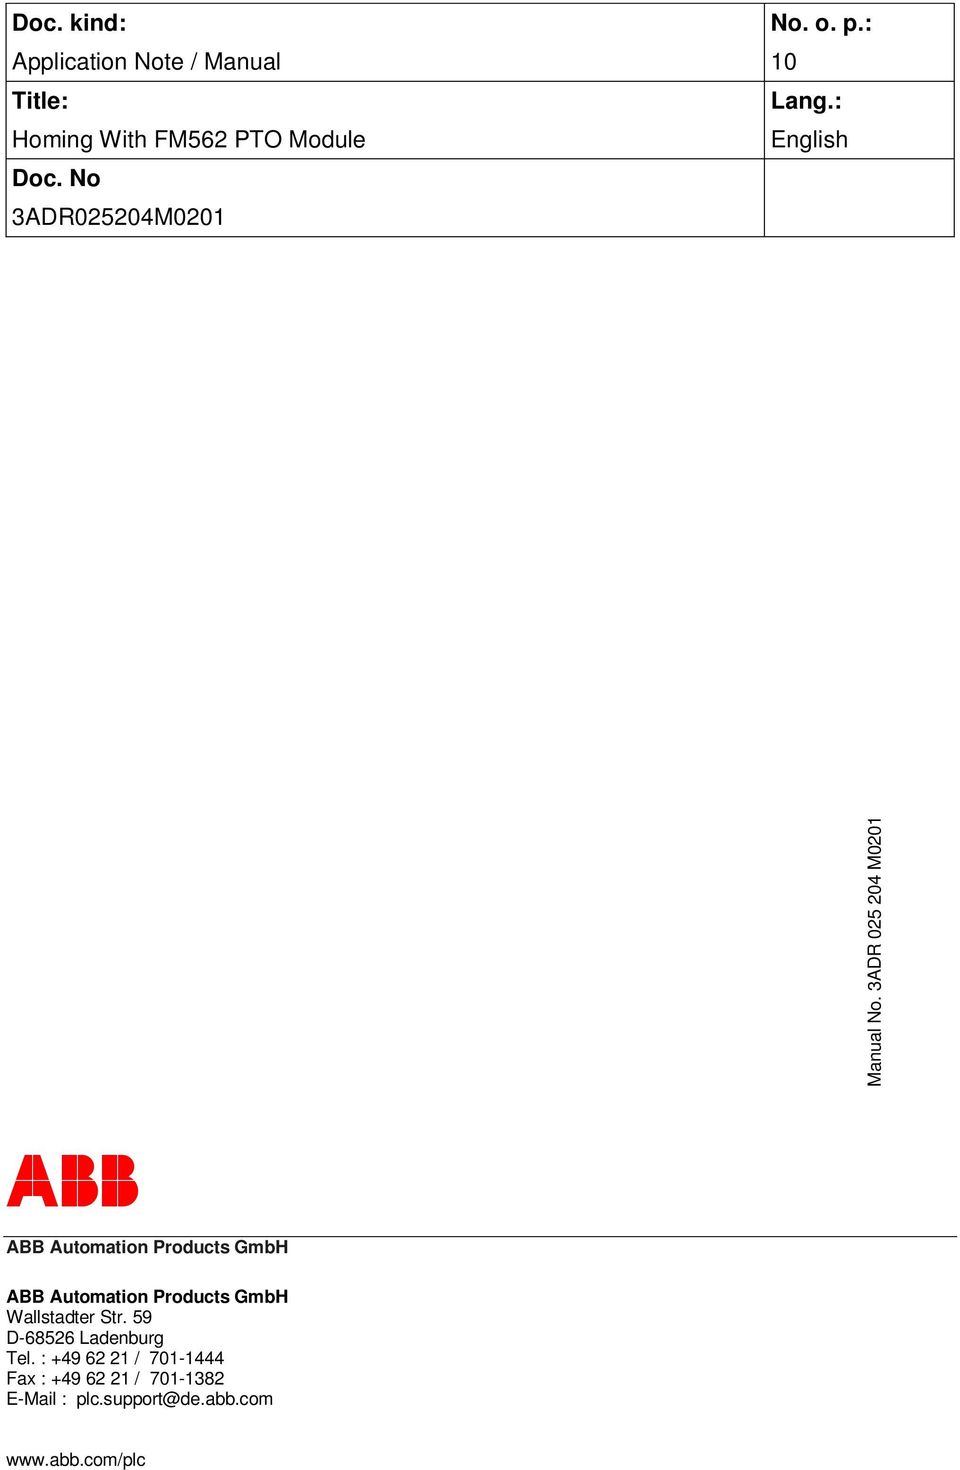 3ADR 025 204 M0201 abb ABB Automation Products GmbH ABB Automation Products GmbH